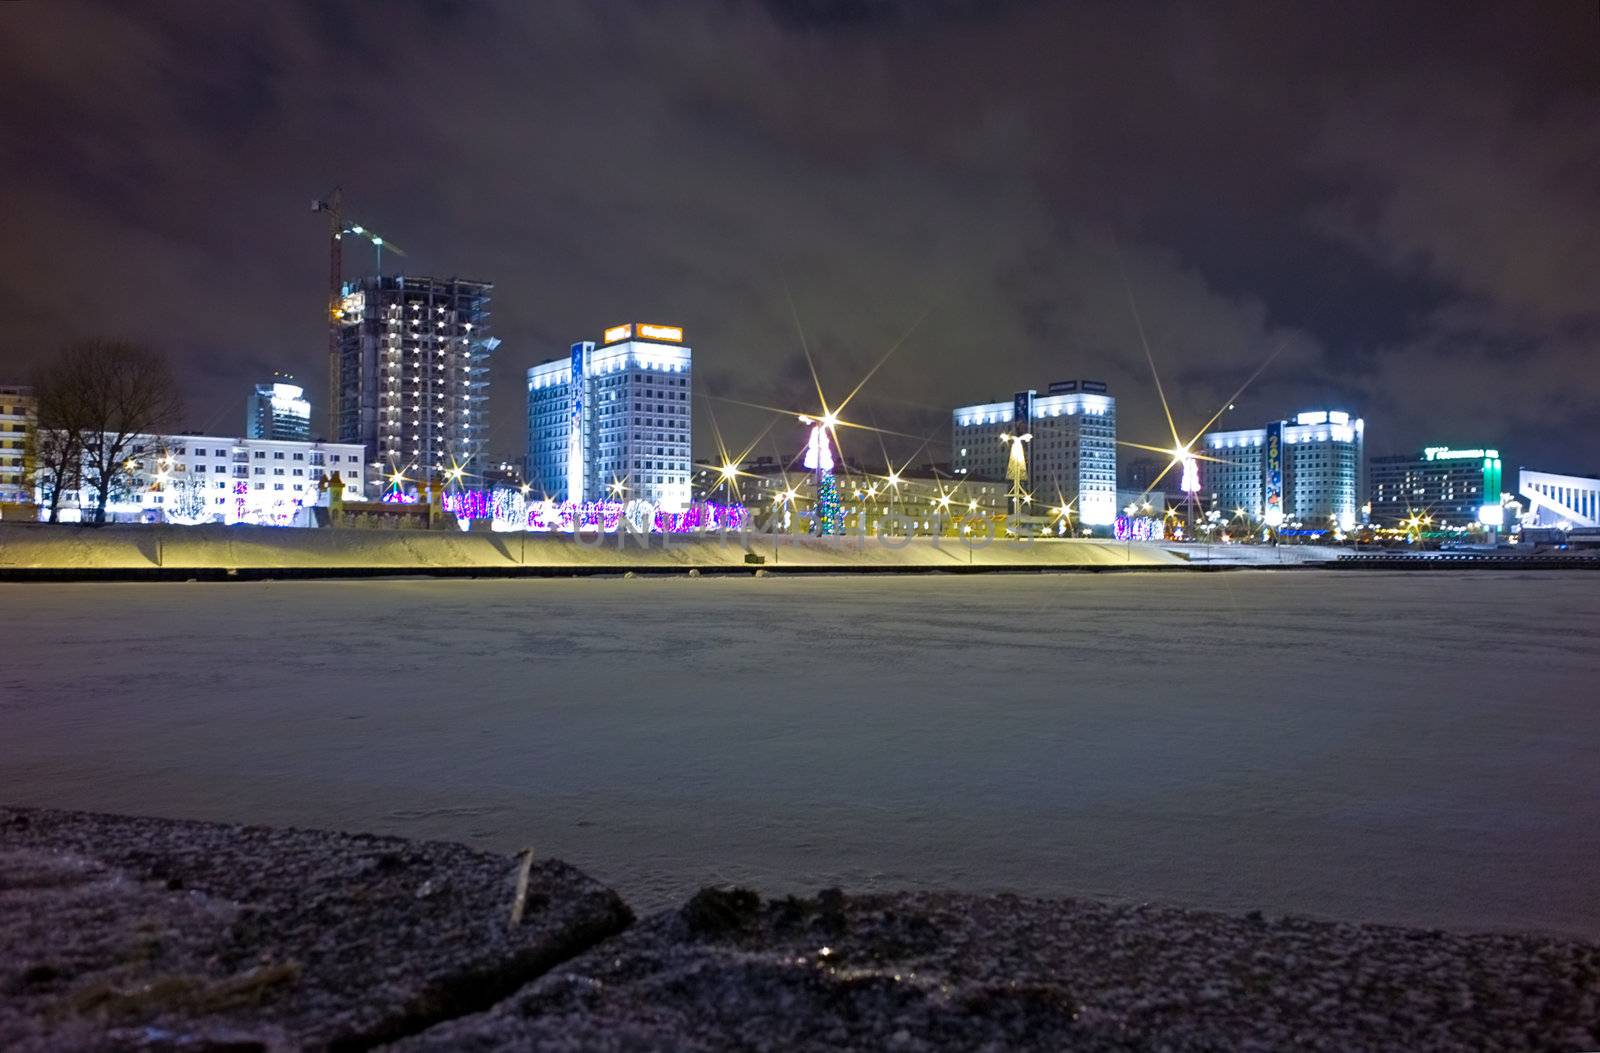 Pobediteley avenue at night Minsk by Alekcey